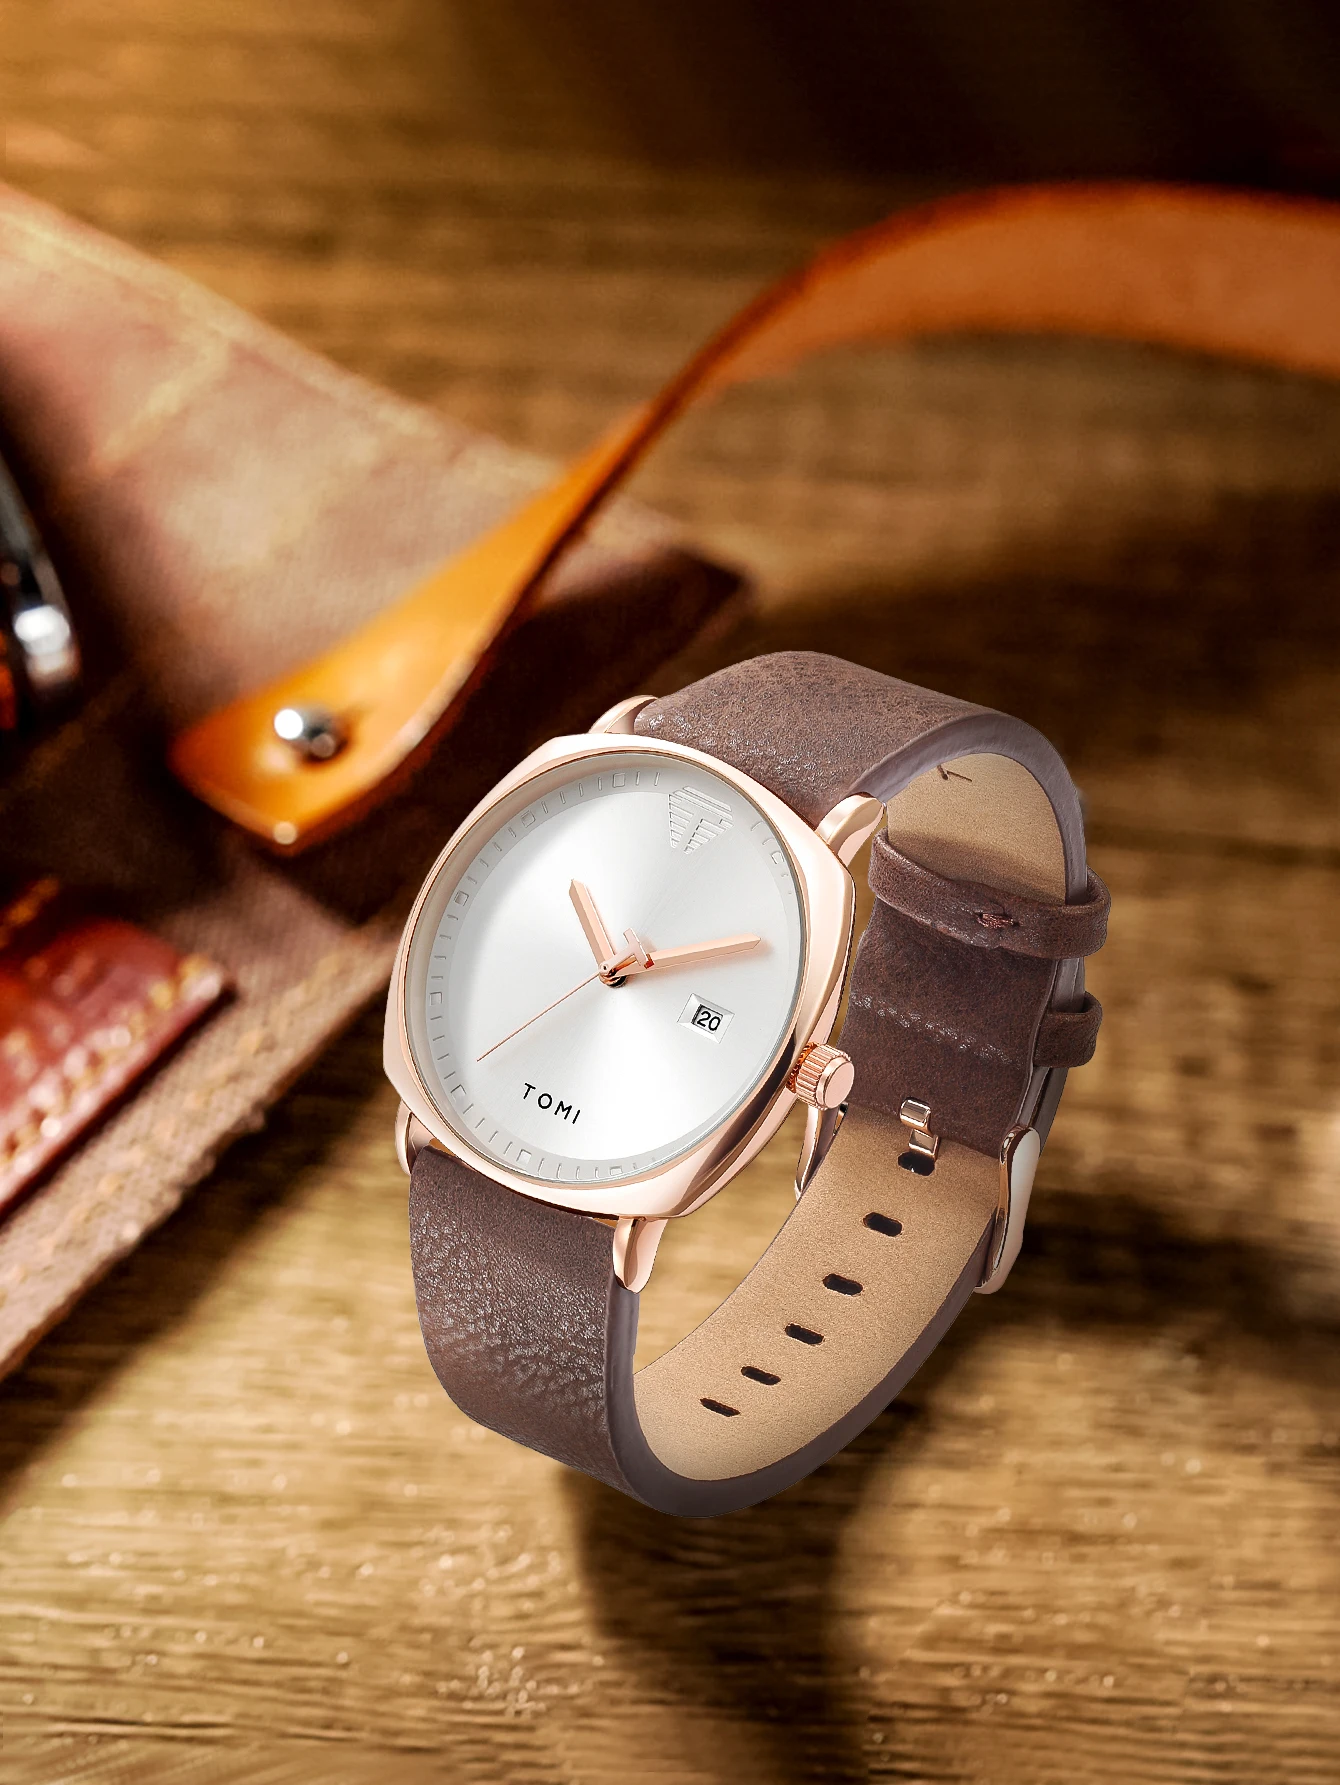 Top Brand TOMI Fashion Sport Quartz Men's Watch Square Clock Leather Strap Simple Dial Women Wristwatch Relogio Masculino